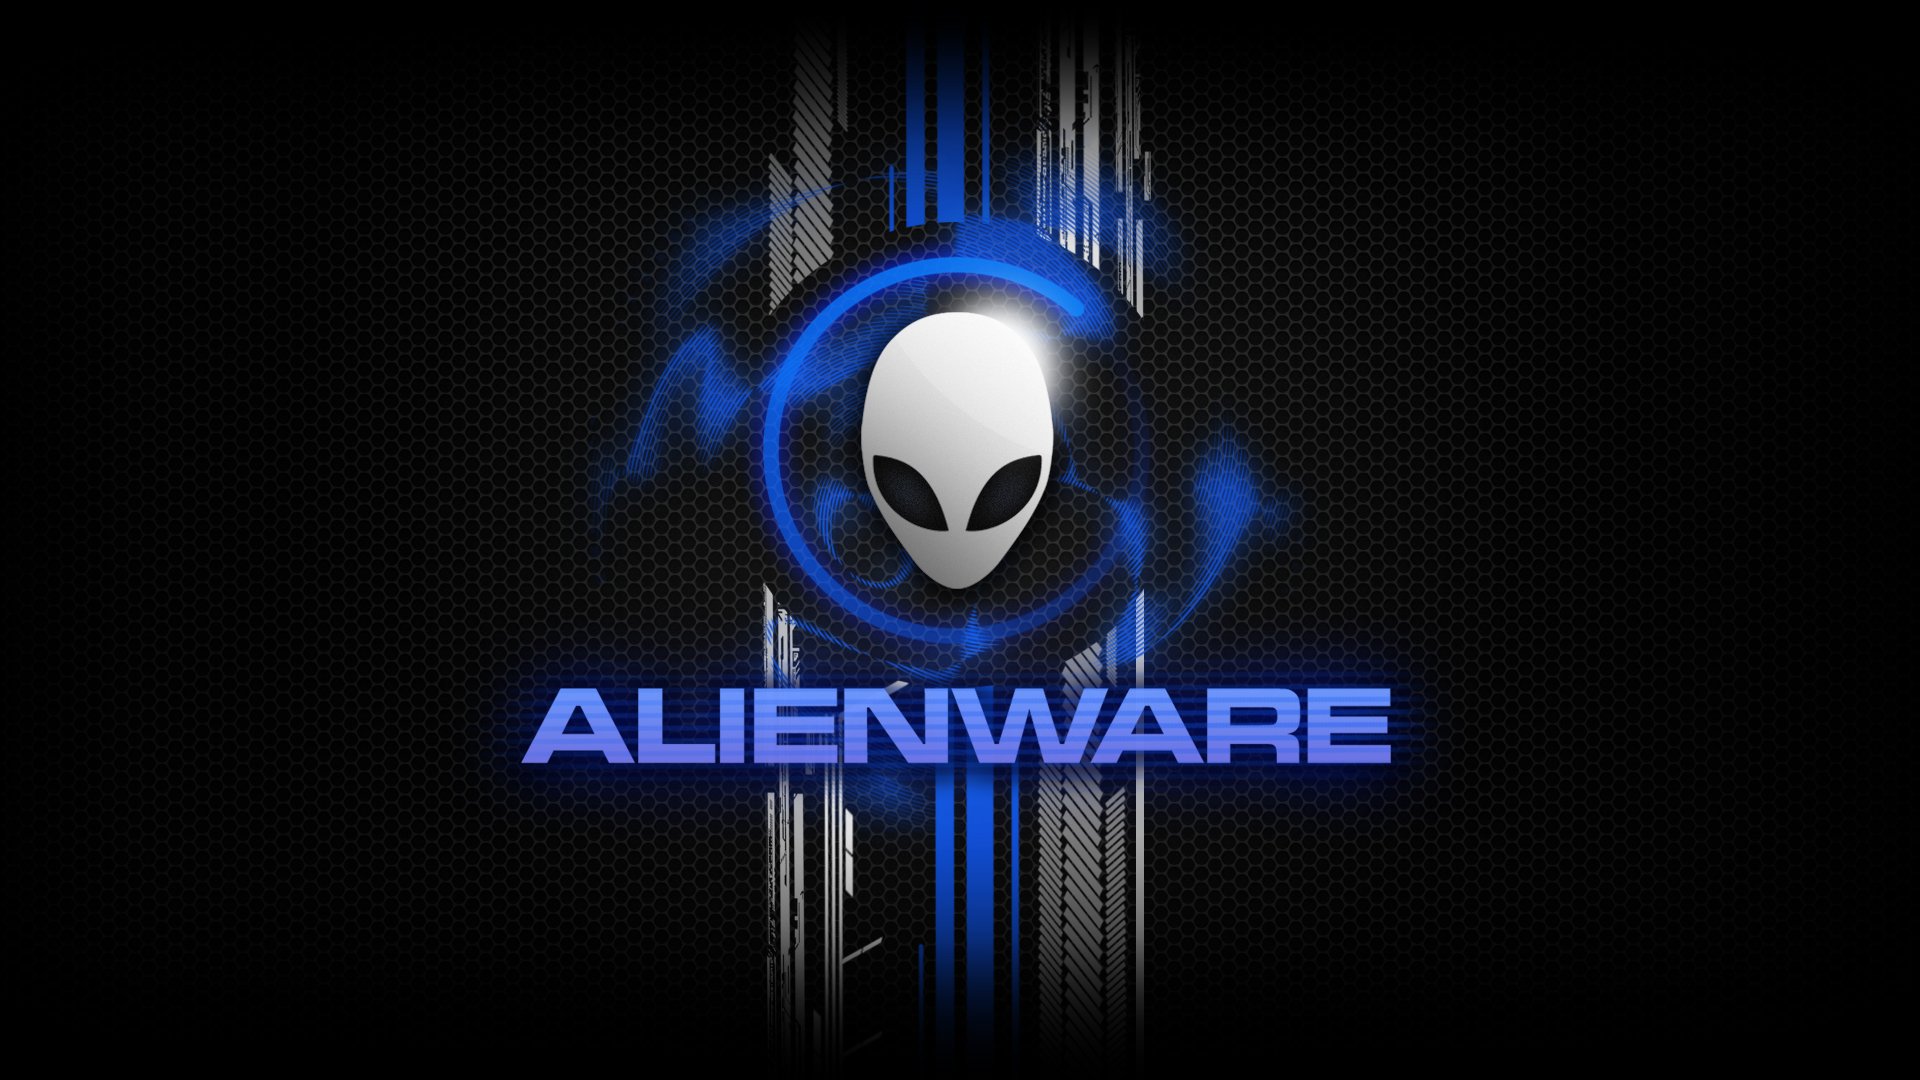 HD Alienware Wallpapers 19201080 Alienware Backgrounds for Laptops 1920x1080